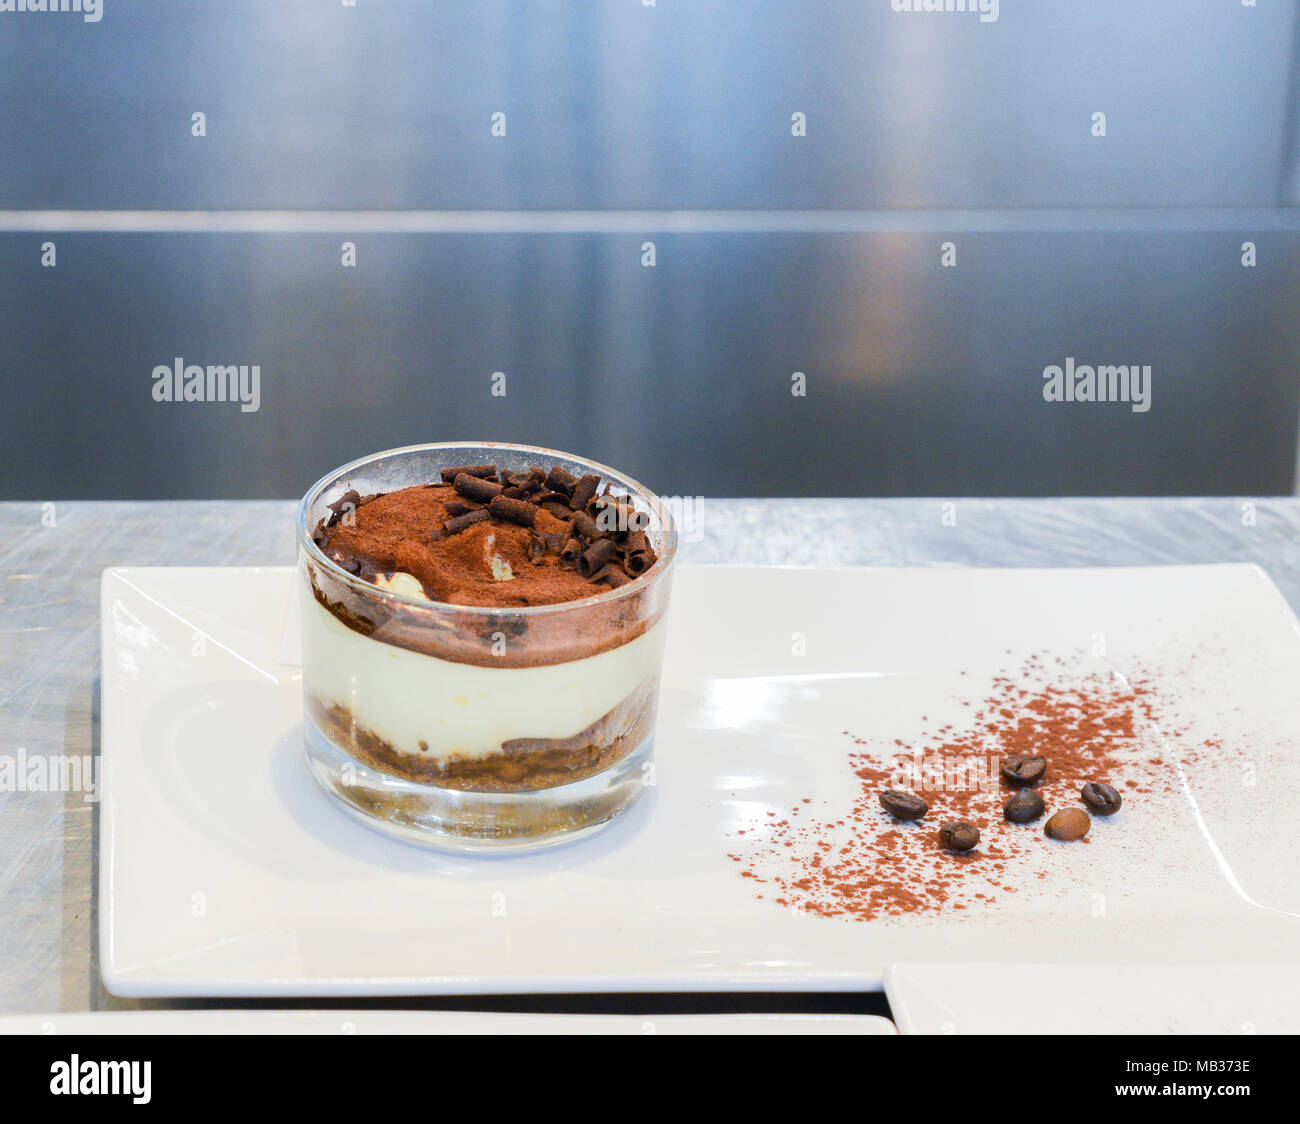 Tiramisu, traditional Italian dessert in a glass. Stock Photo